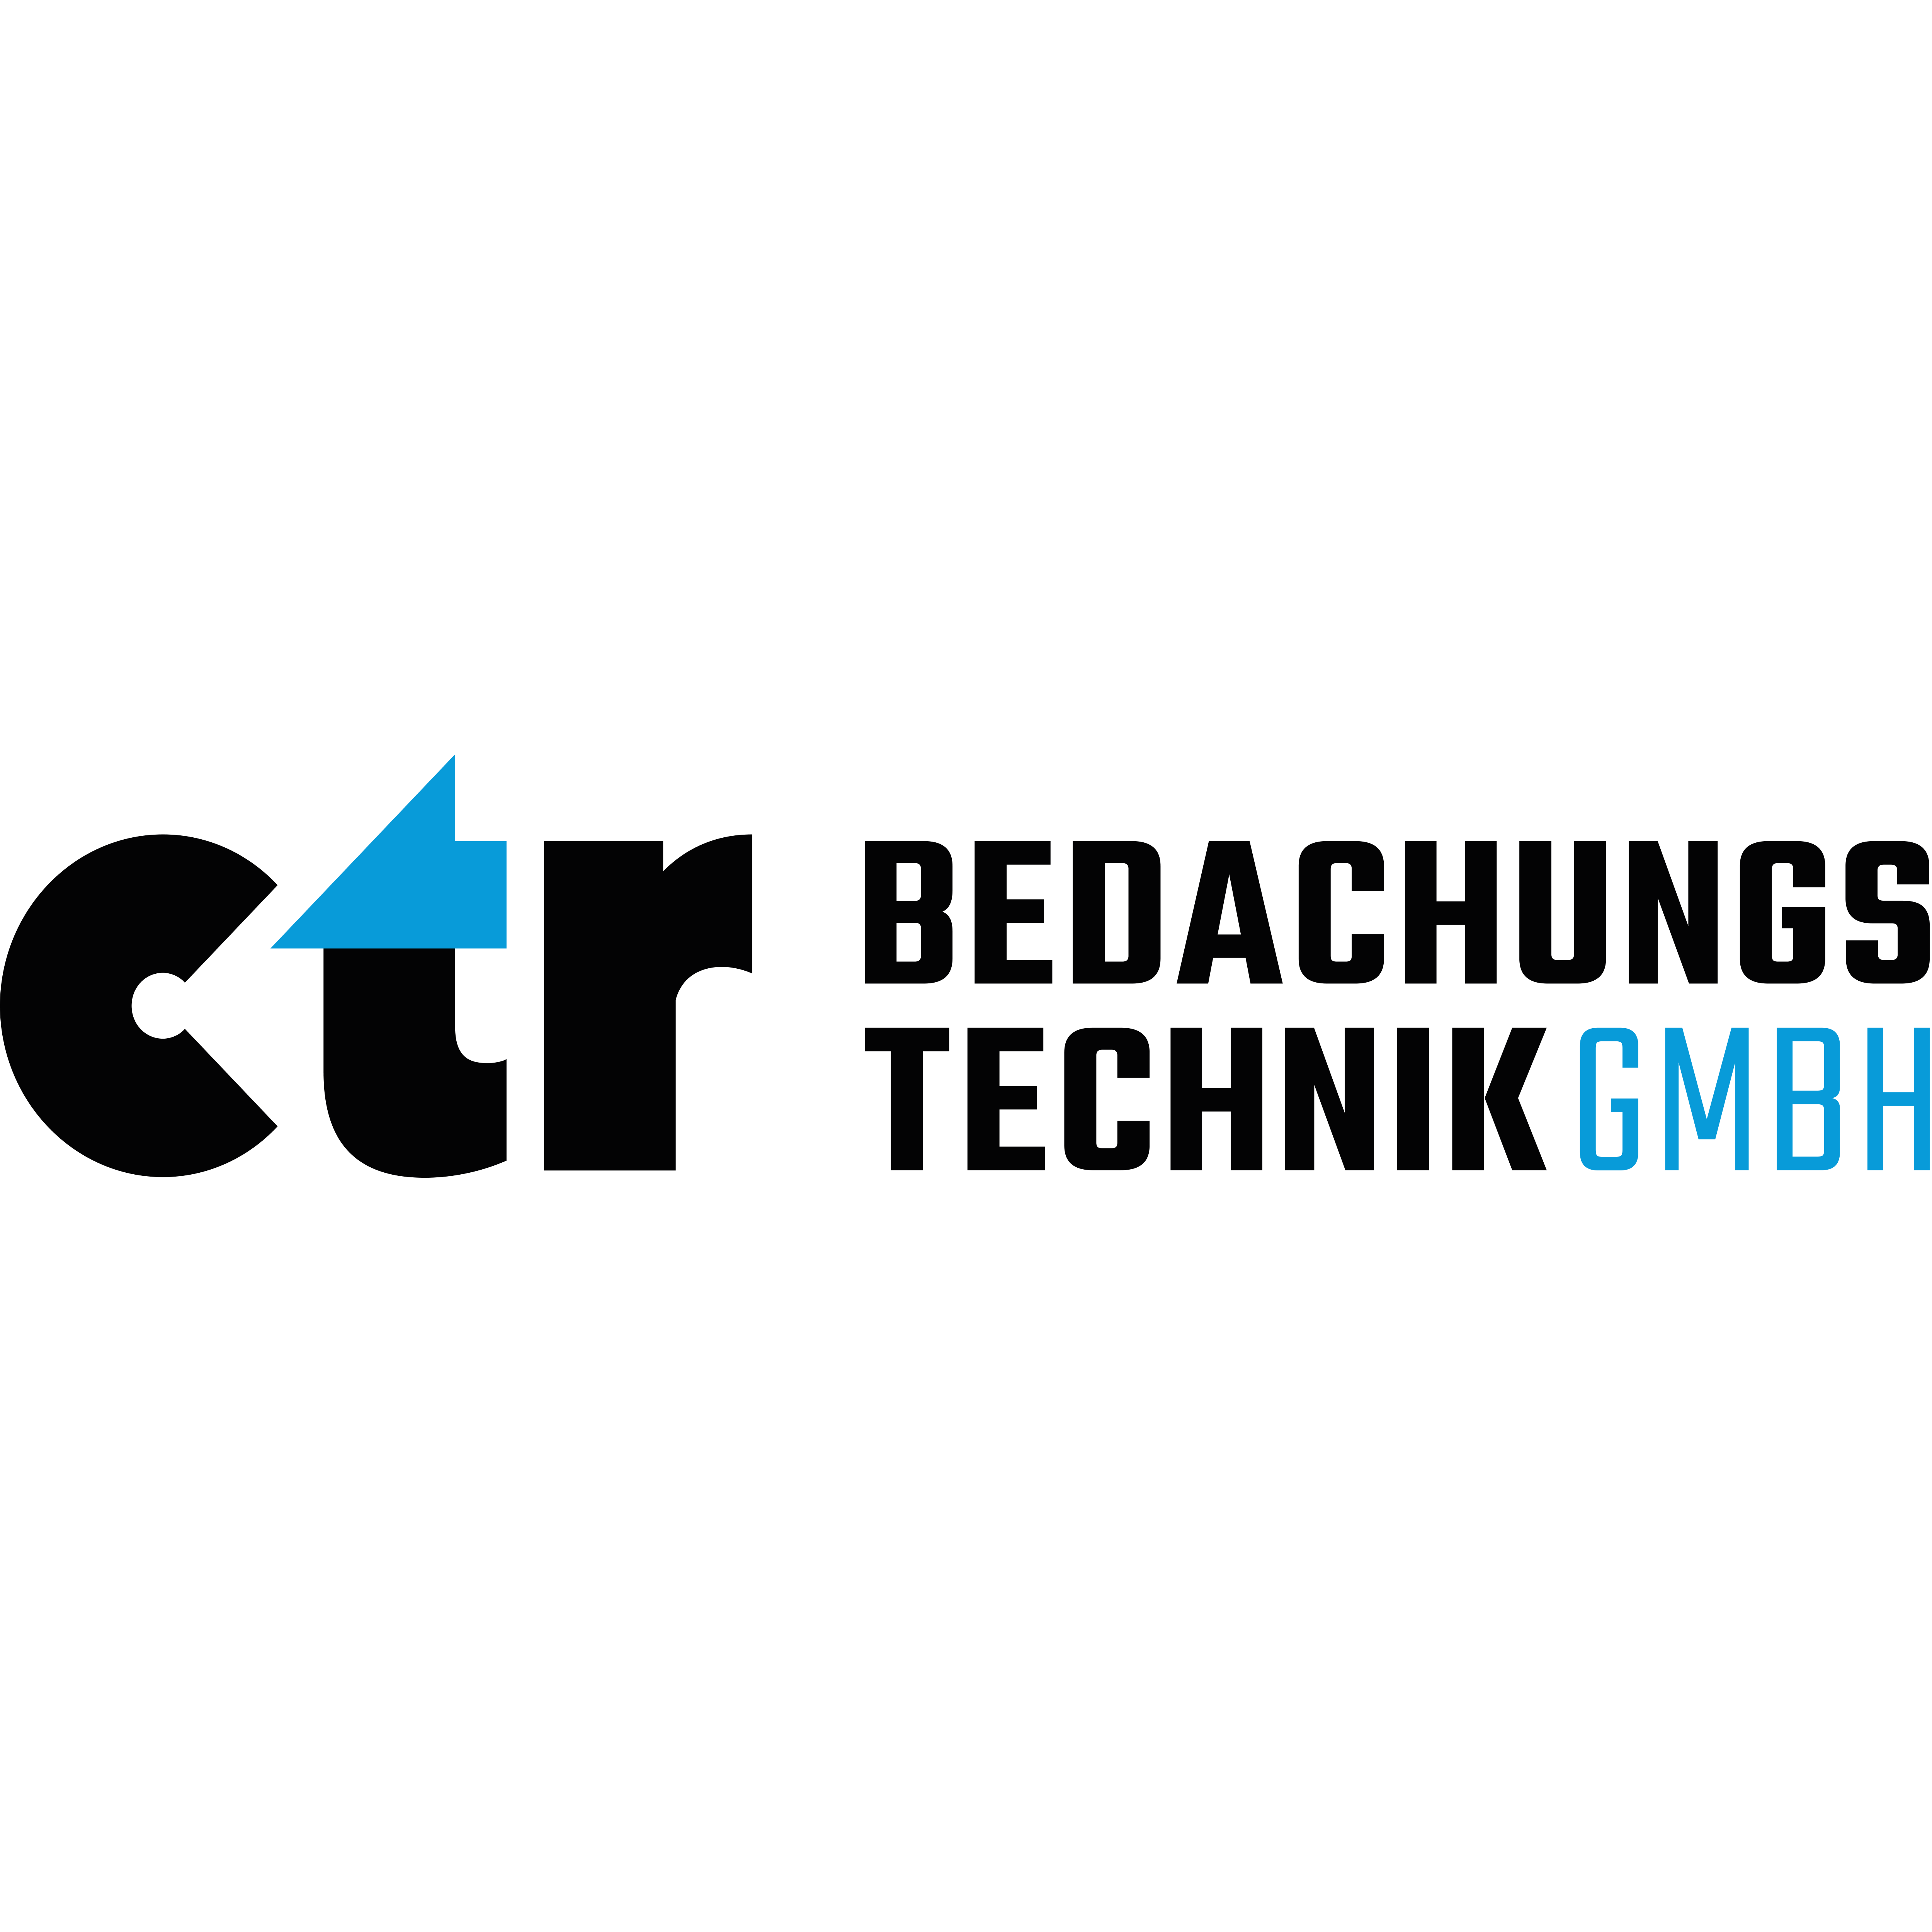 CTR Bedachungstechnik GmbH in Köln - Logo